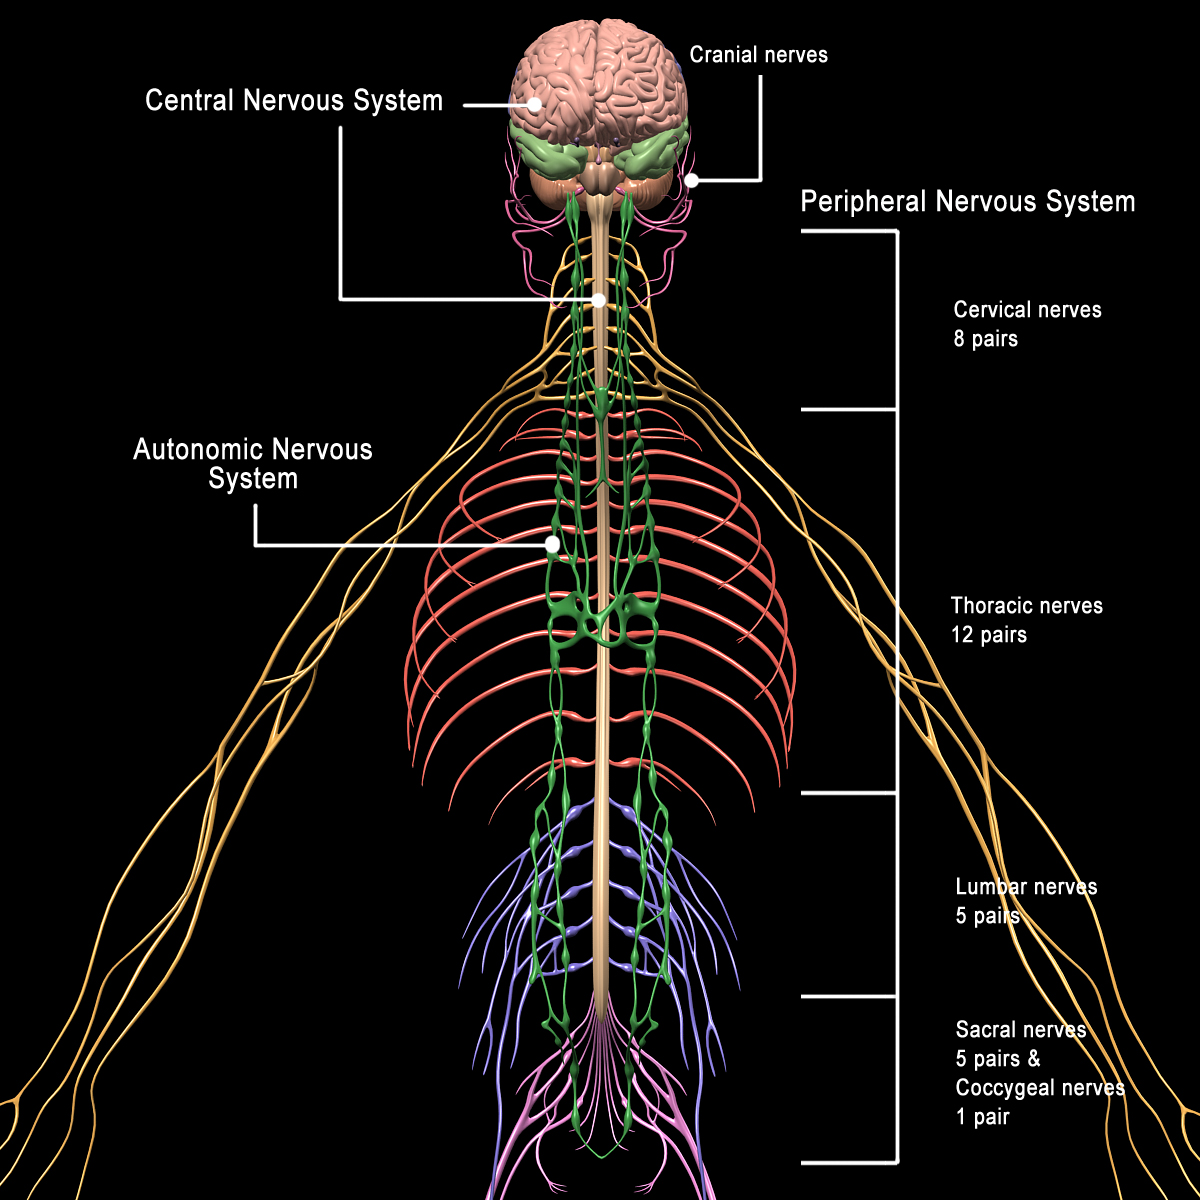 Skeleton, Anatomy & Nervous System ( Rigged ) – MotionCow